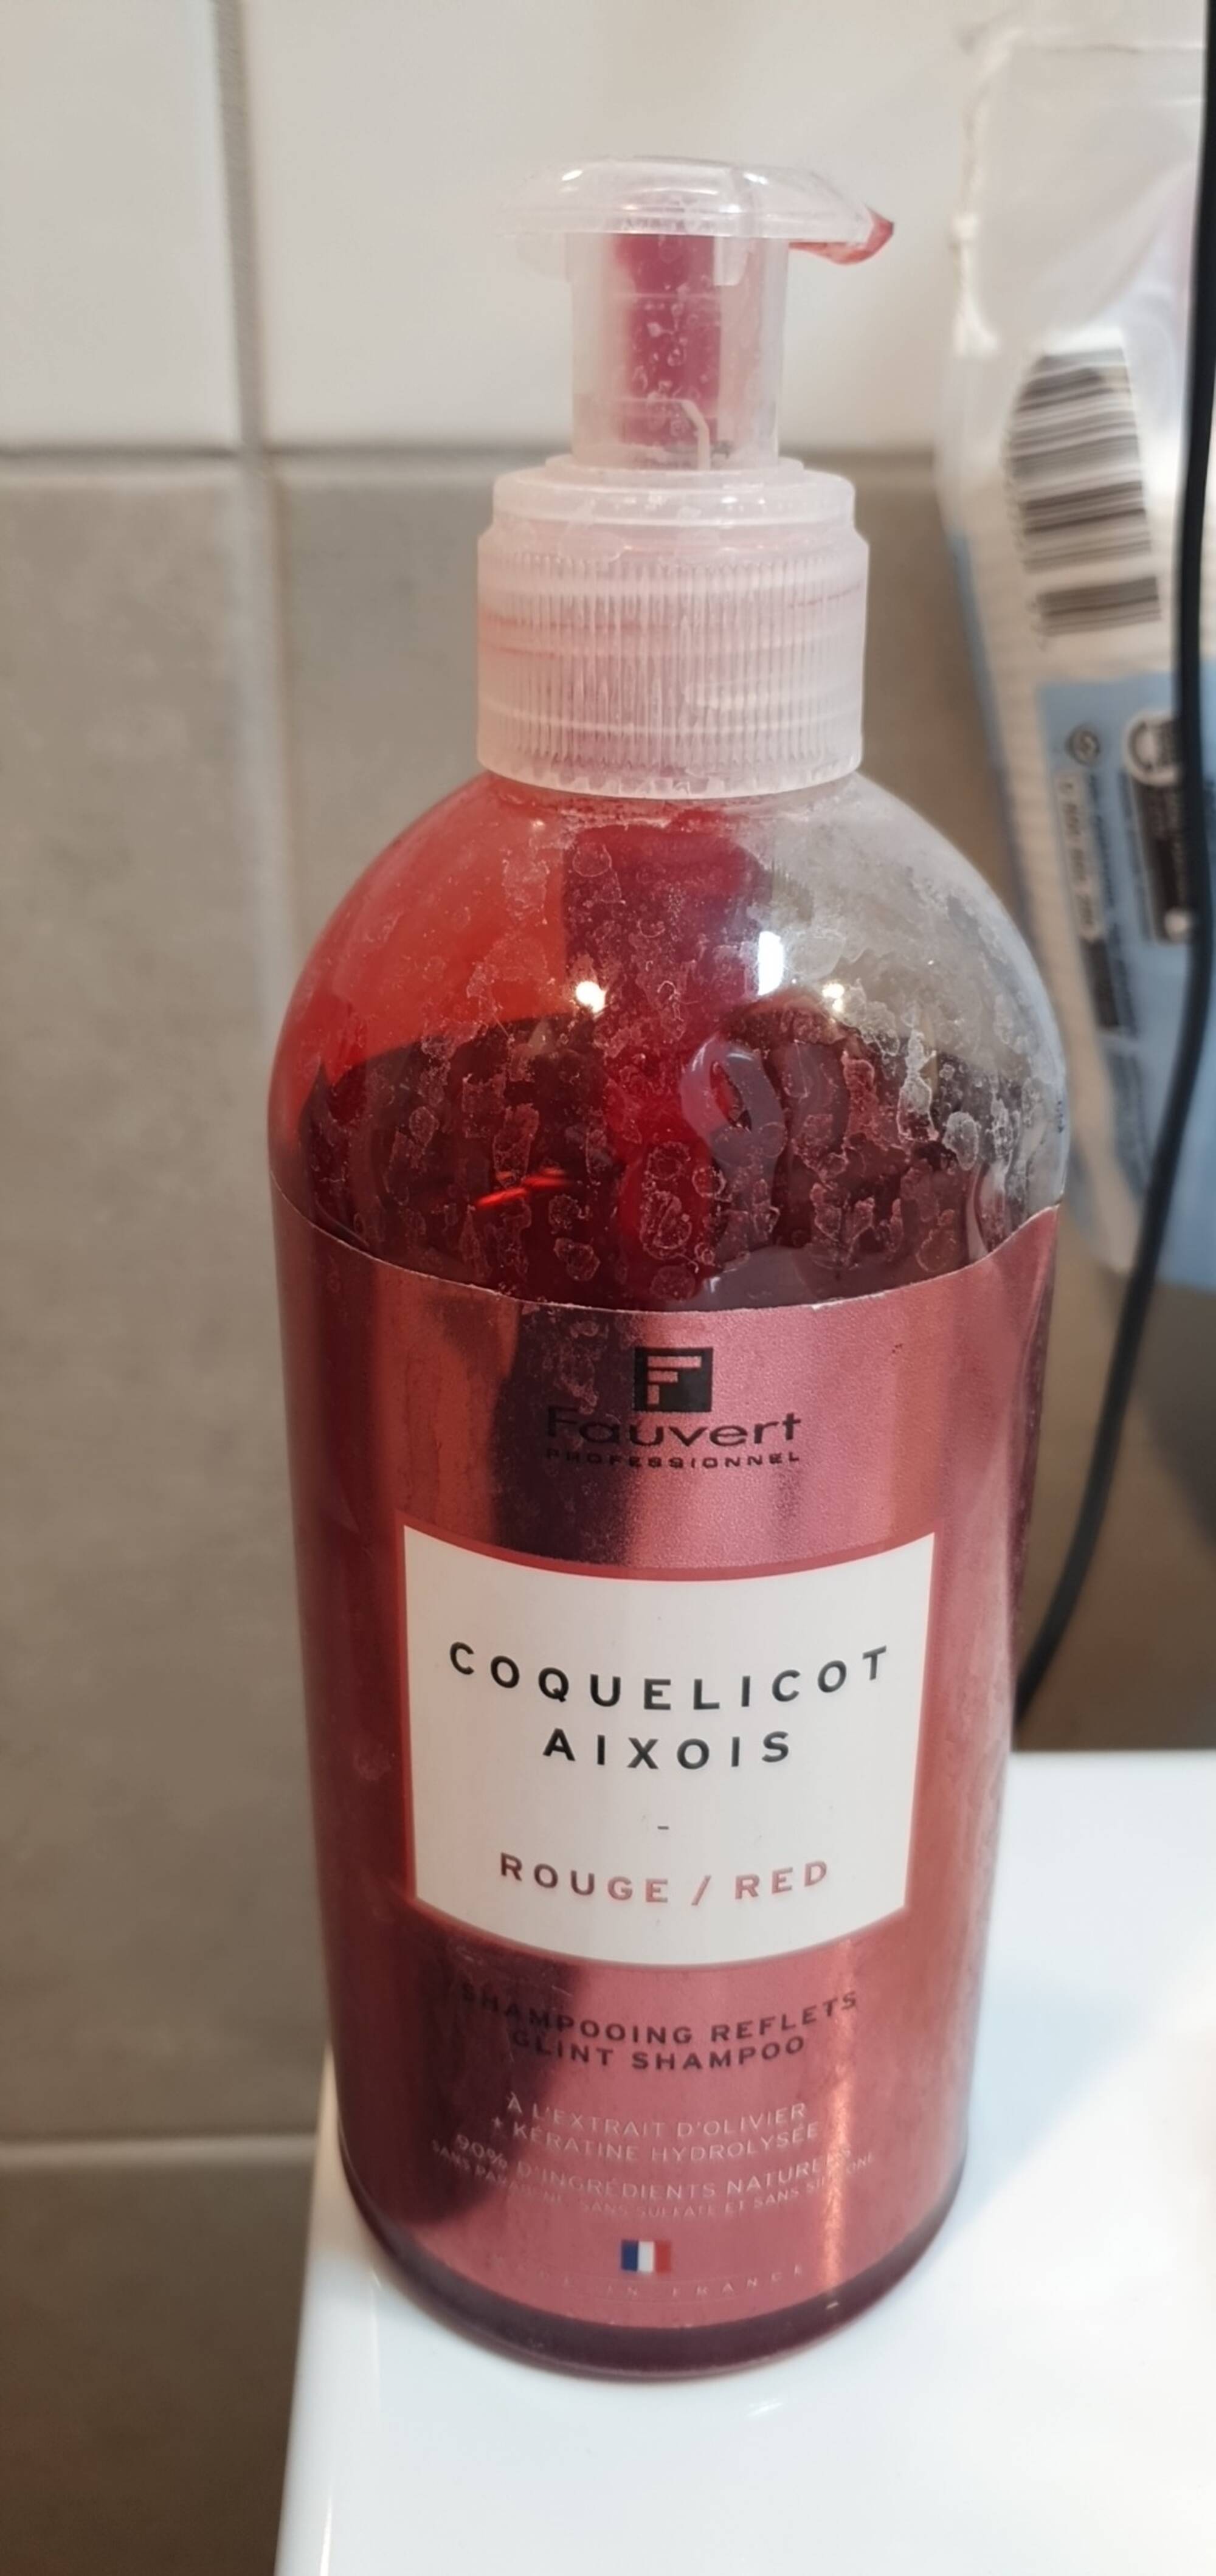 FAUVERT PROFESSIONNEL - Coquelicot aixois - Shampooing reflets ROUGE